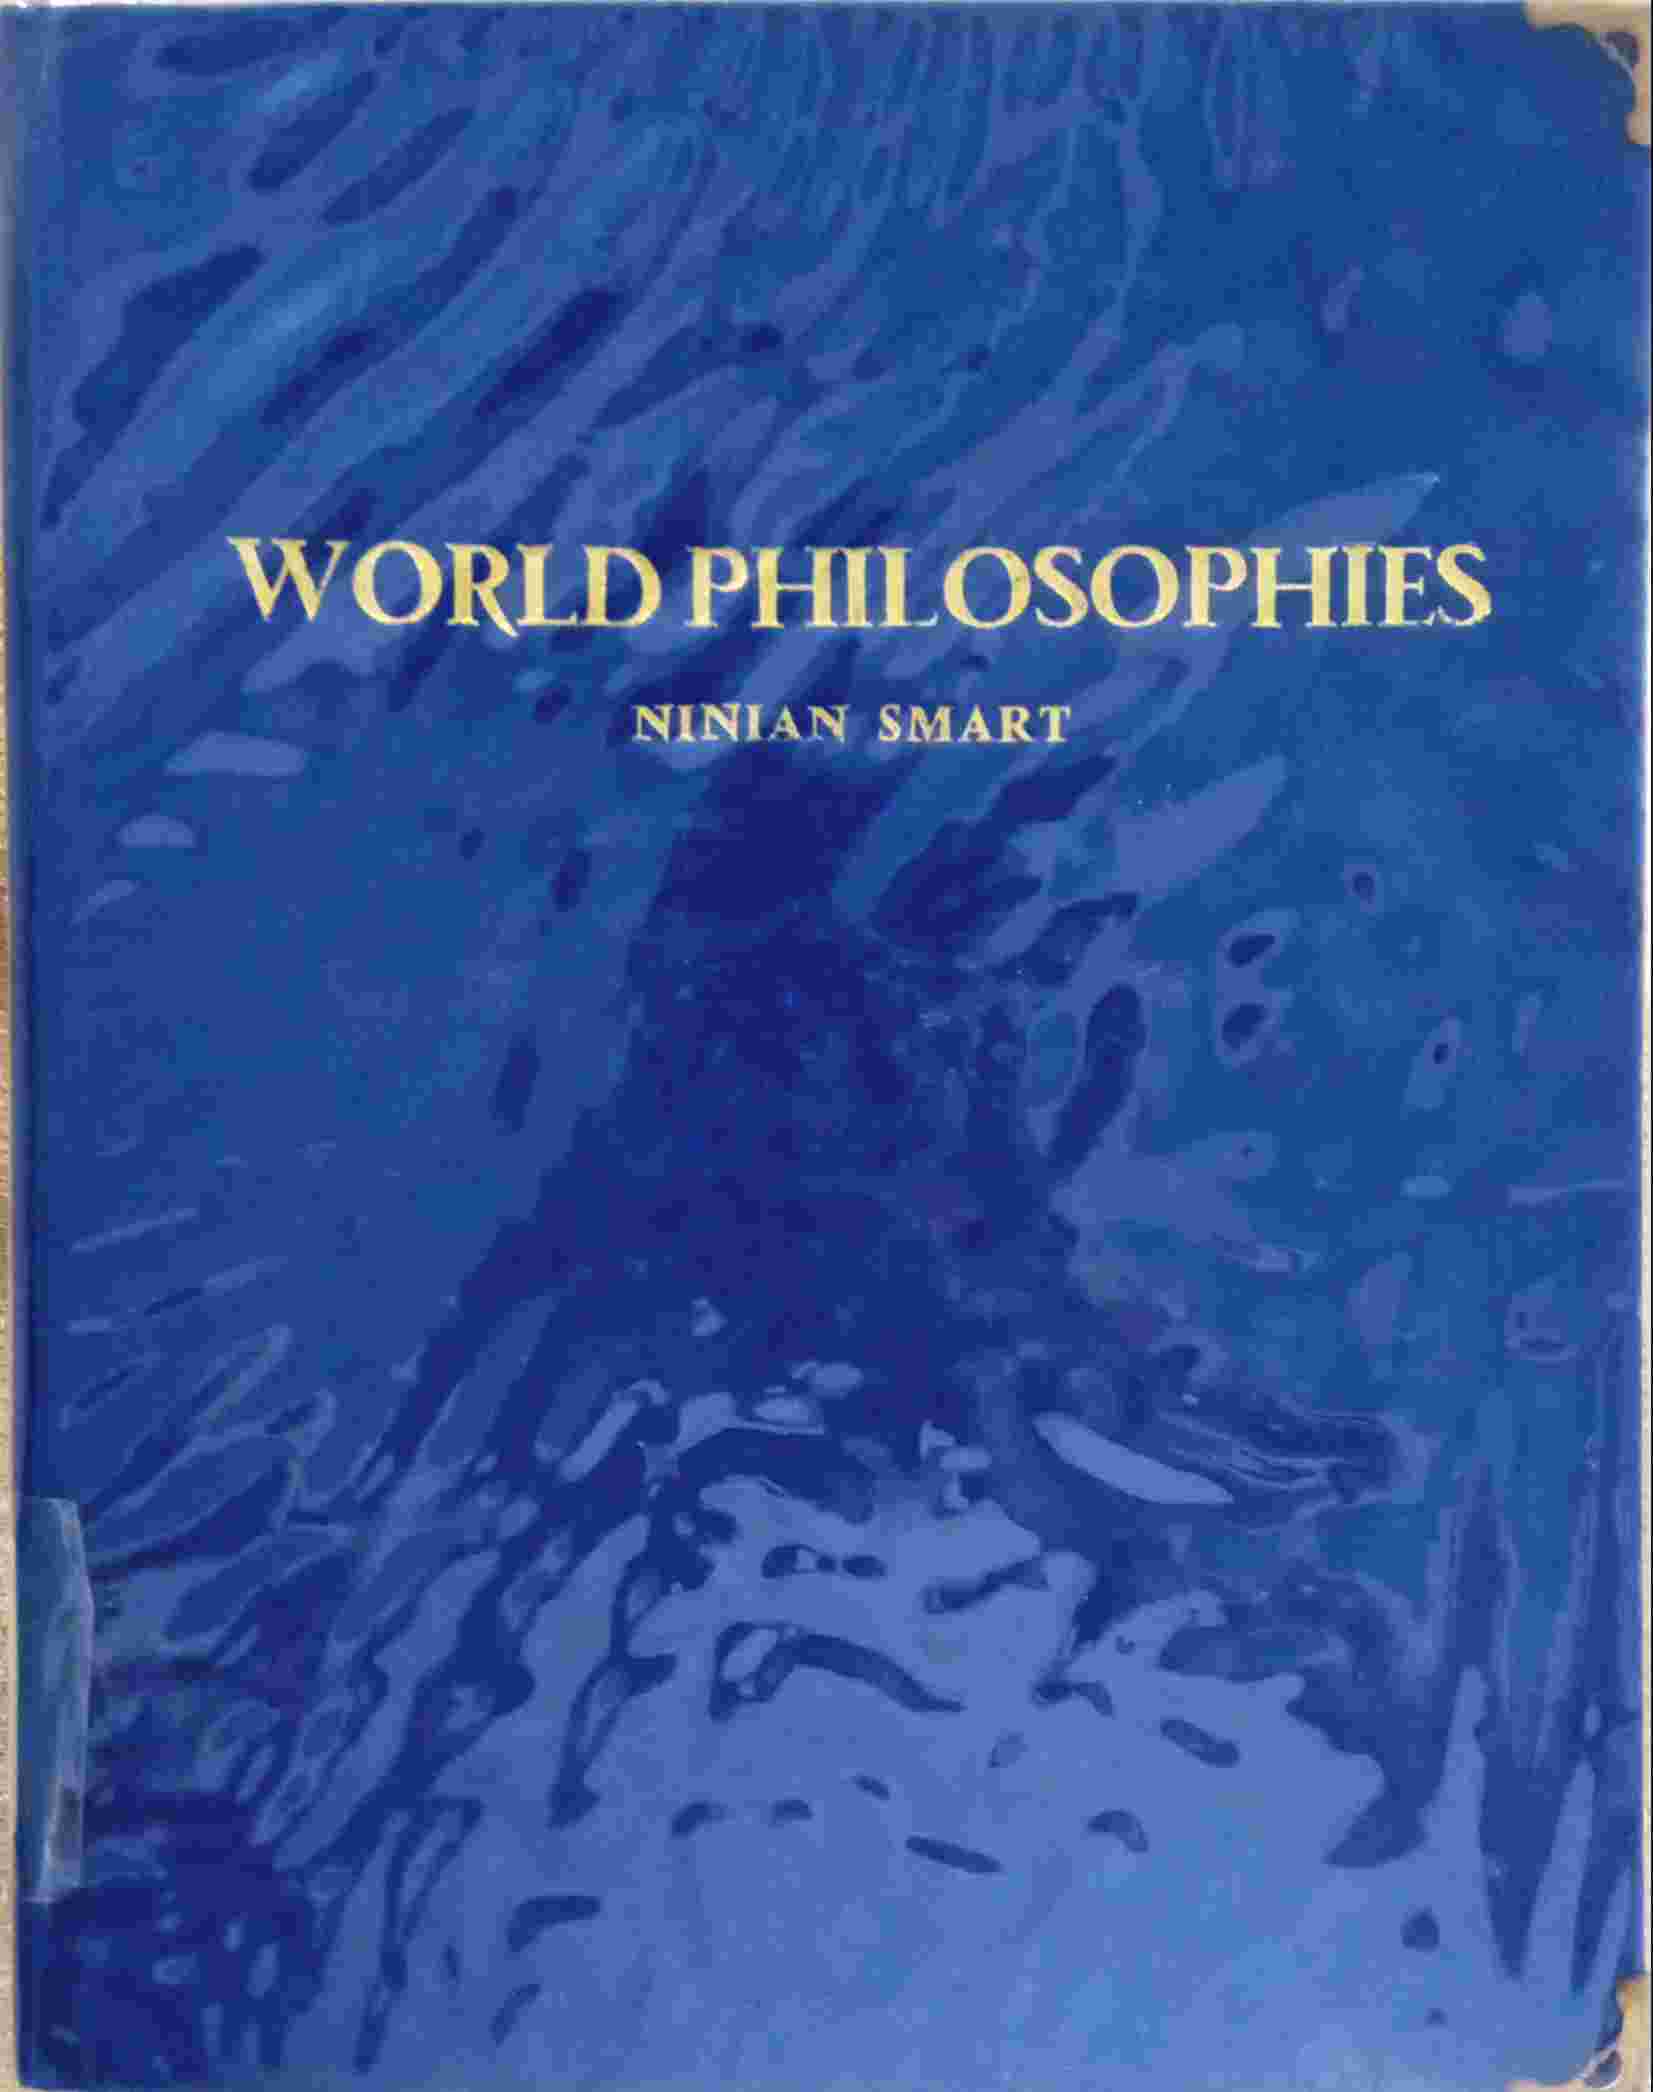 WORLD PHILOSOPHIES